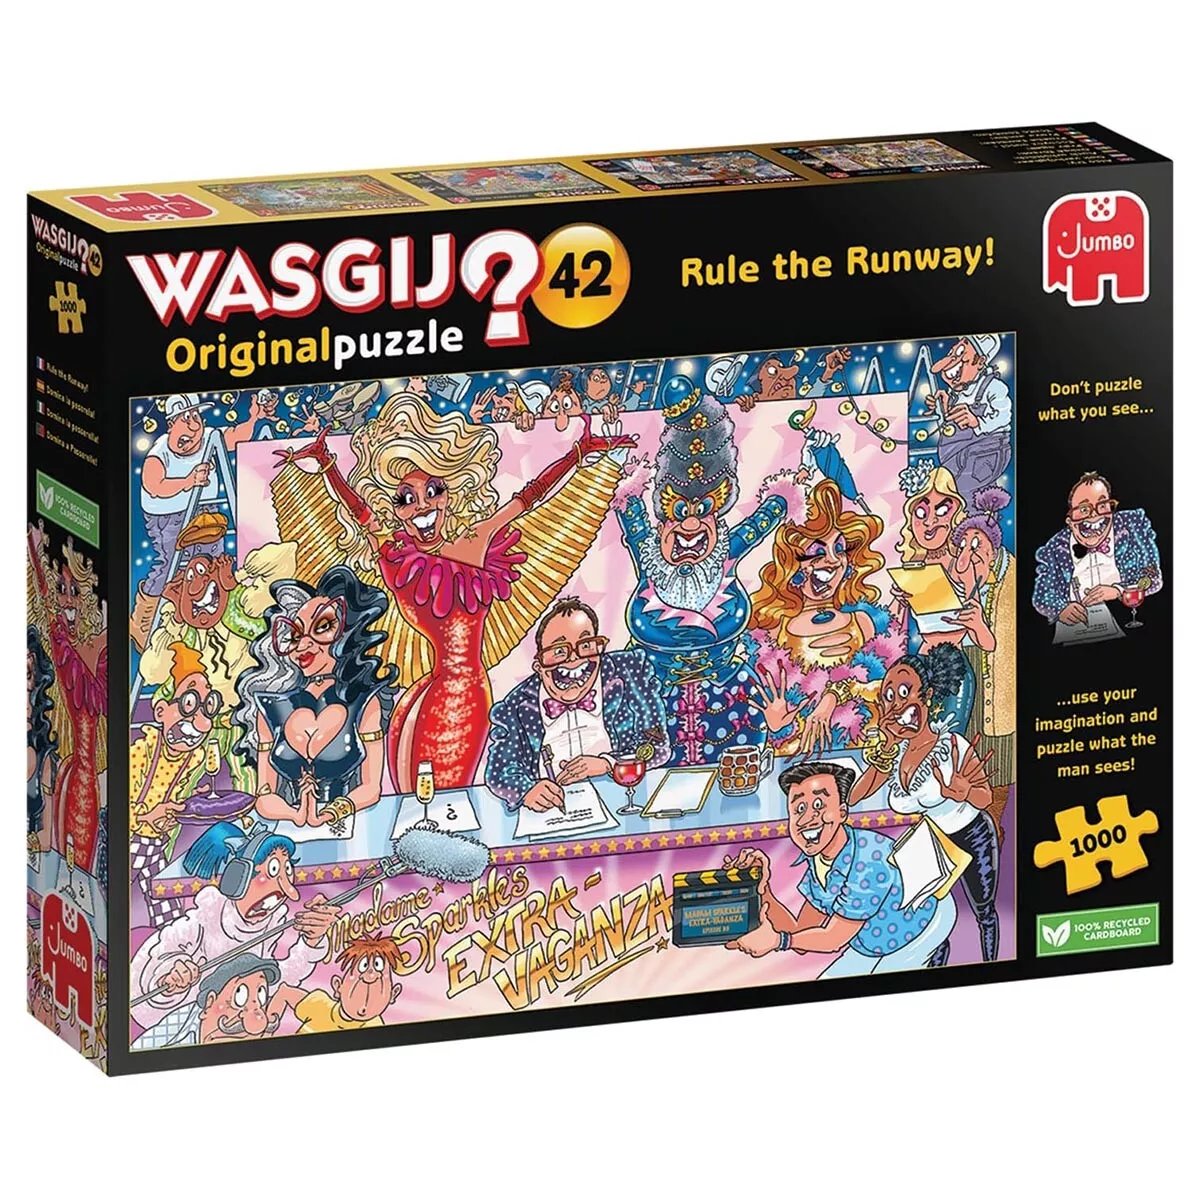 WASGIJ? Original 42 Rule the Runway! 1000 Pieces Jigsaw Puzzle